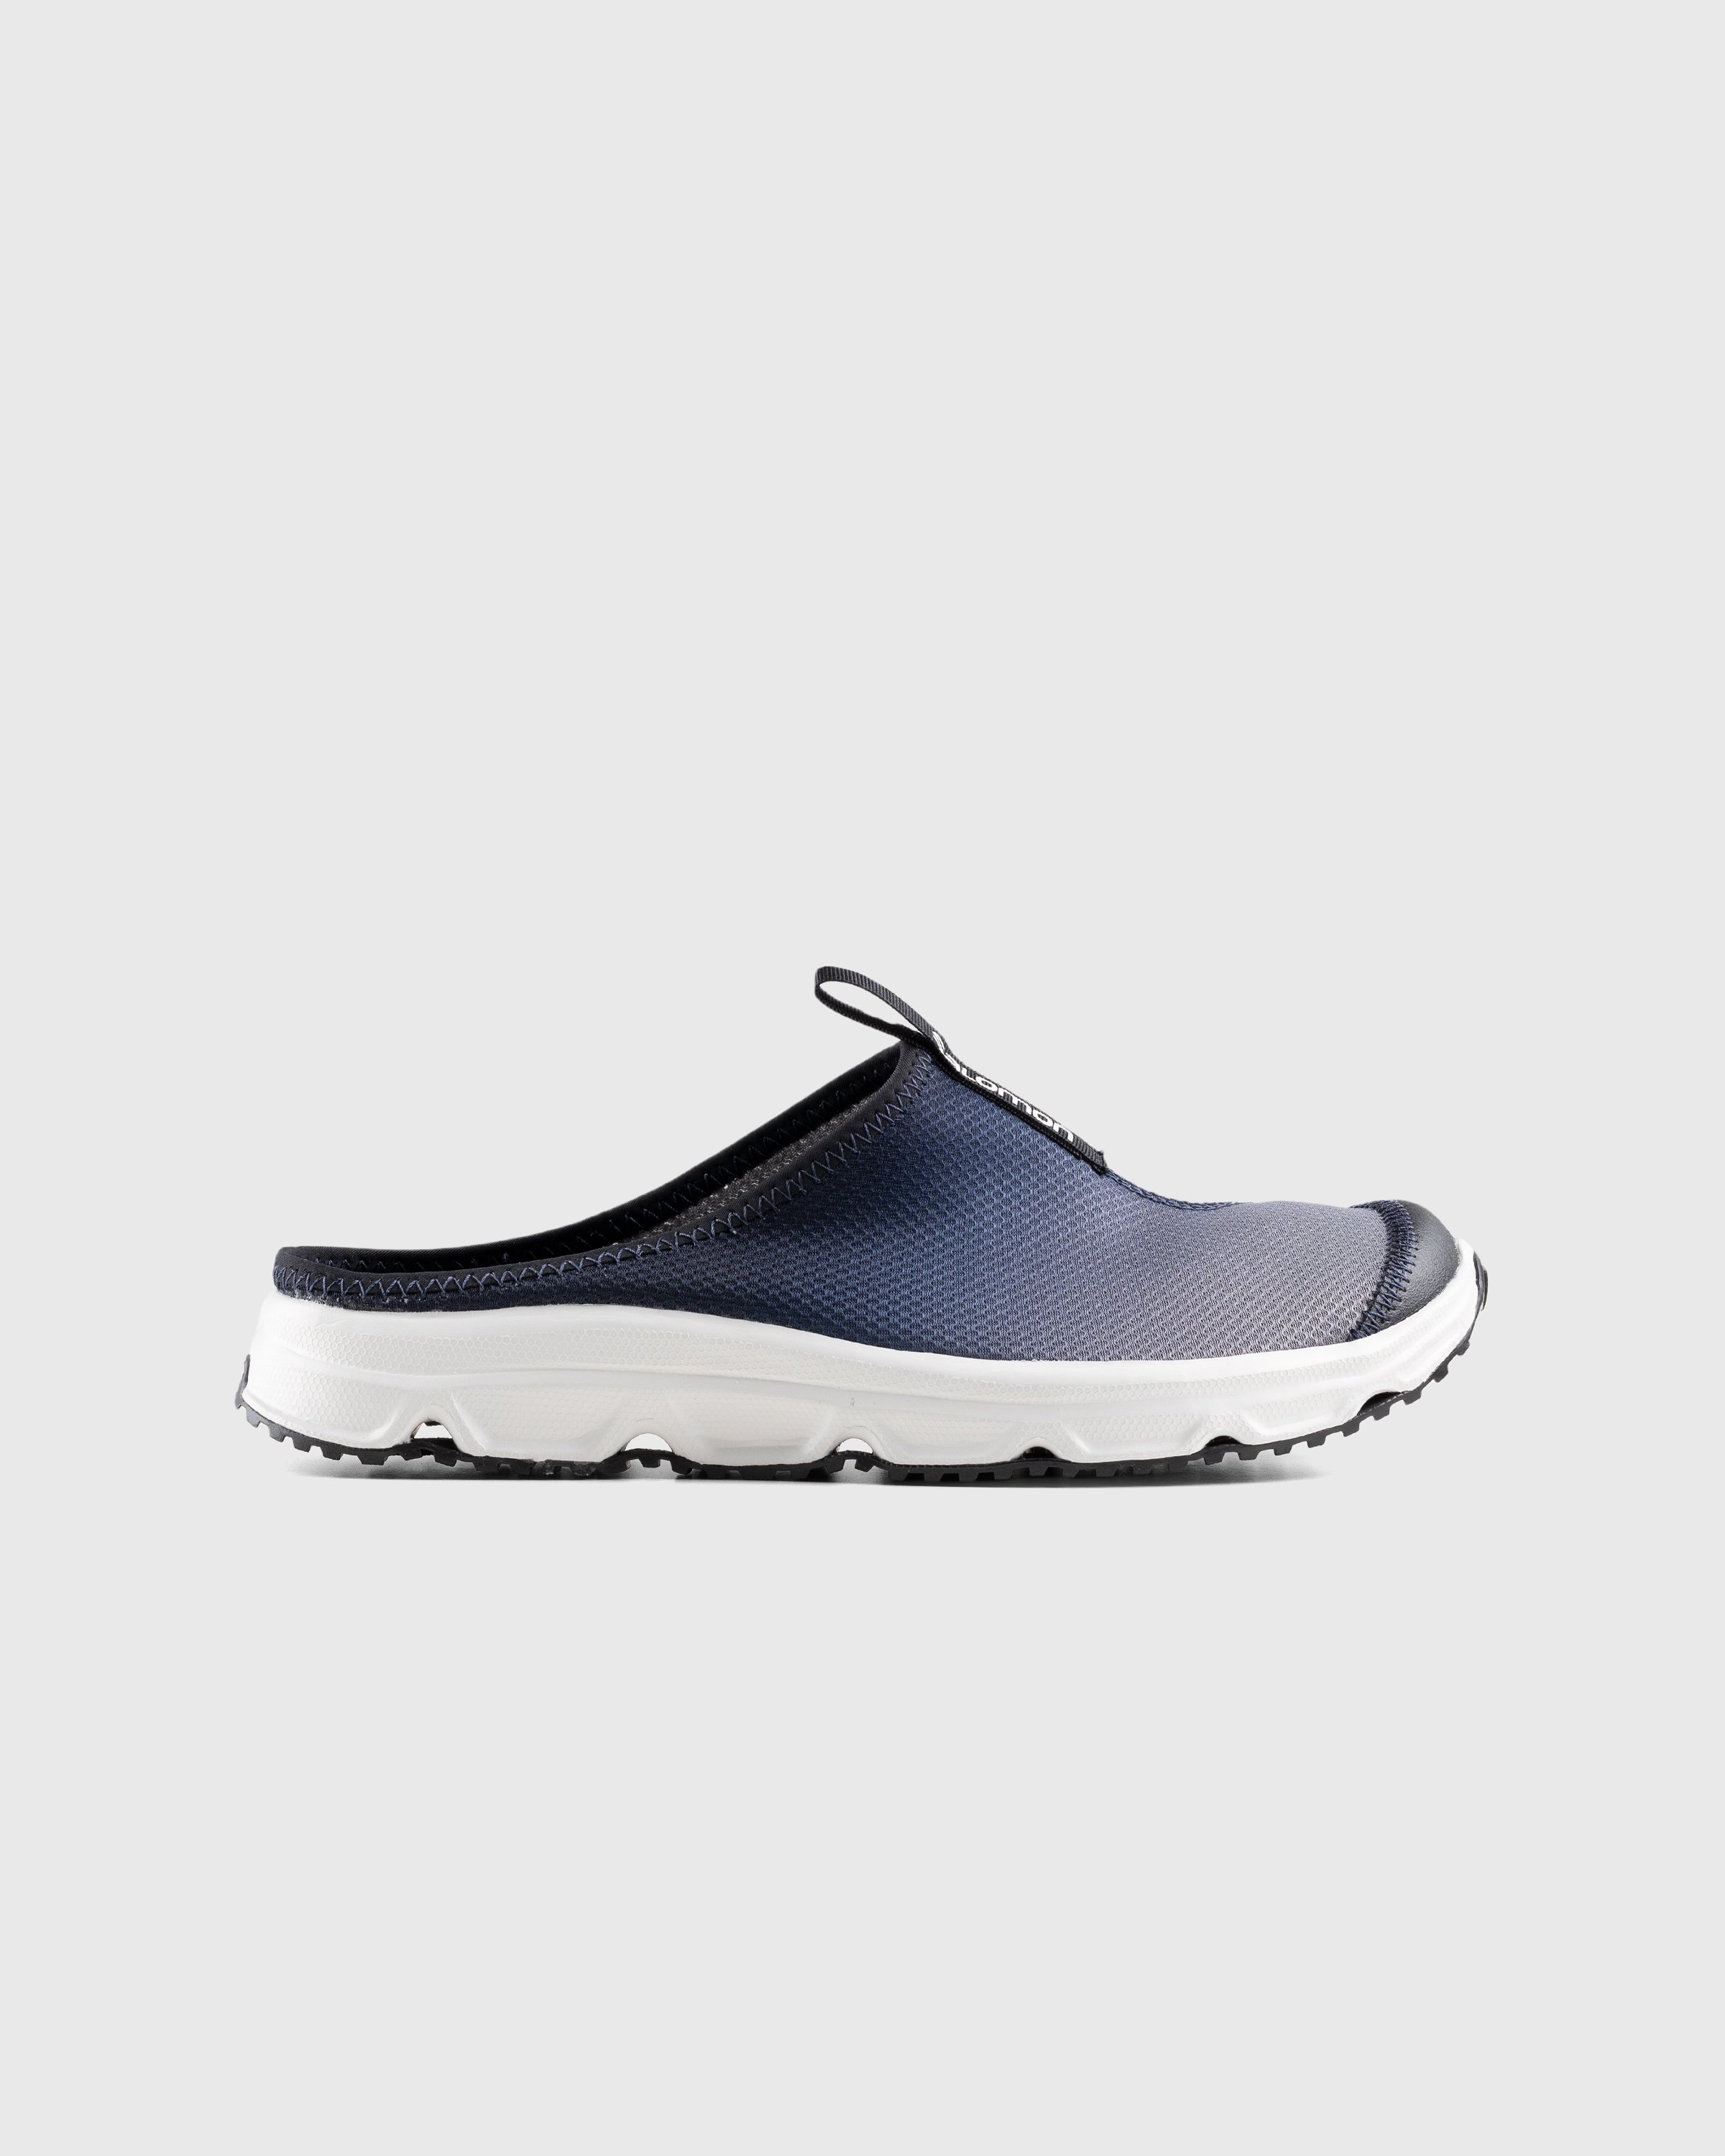 Salomon x Beams - RX Slide 3.0 Quiet Shade/Night Sky/Black - Footwear - Blue - Image 1